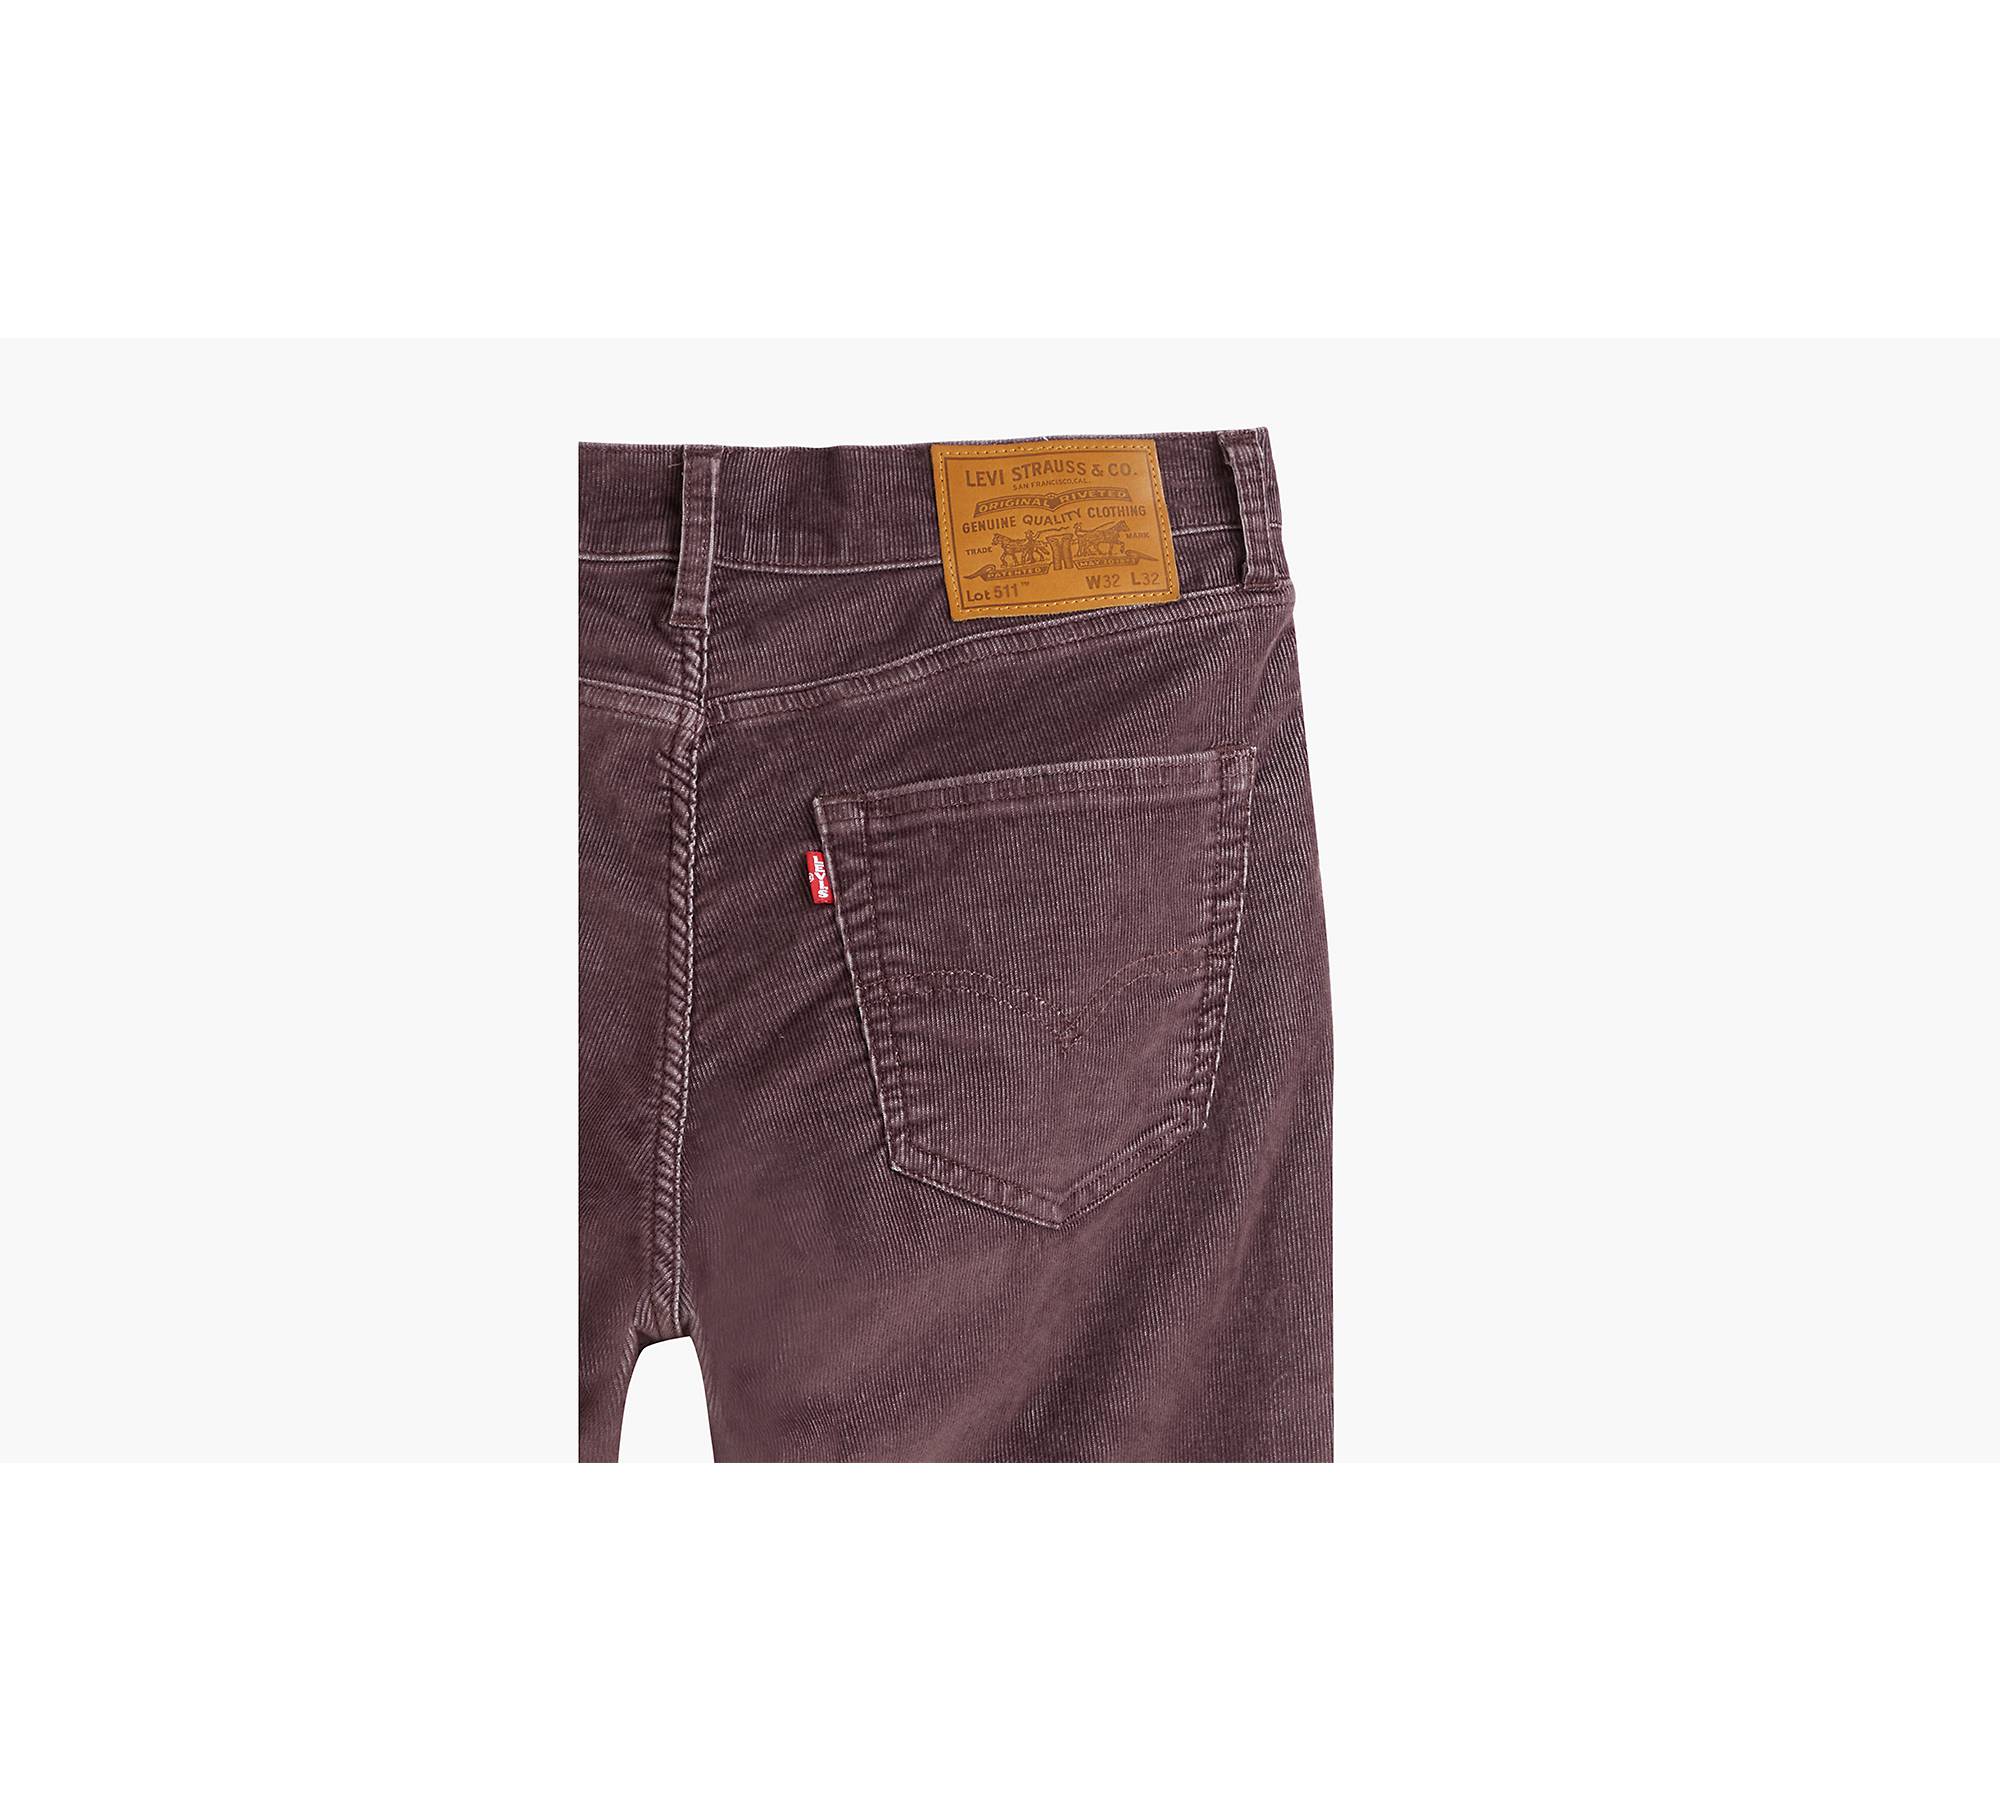 Levi's Men's 511 Slim Fit Corduroy Jeans Chocolate Brown 32W x 32L  045115699